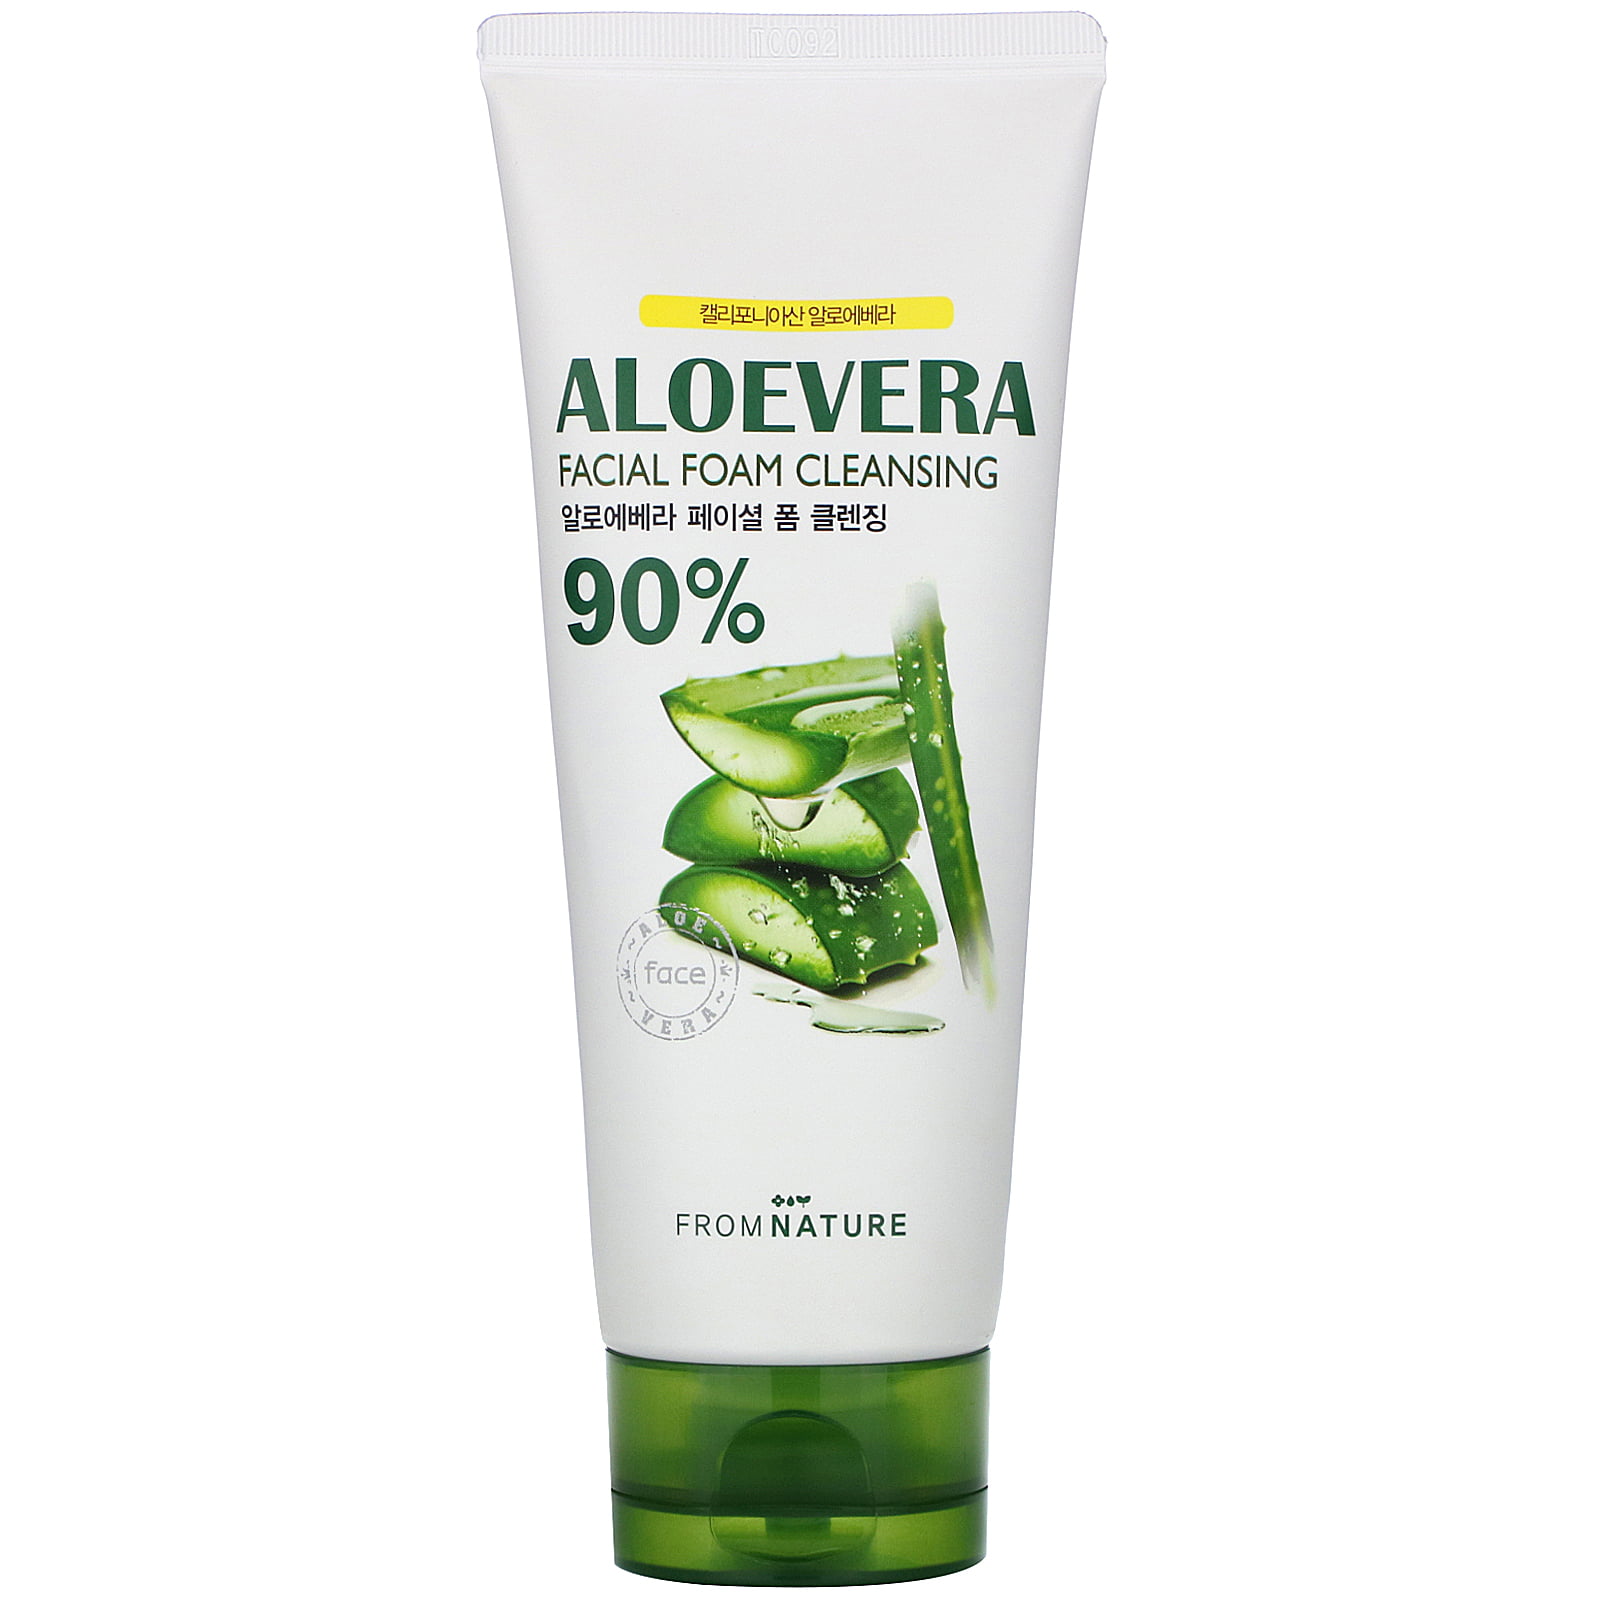 FromNature Aloe Vera, 90%, Facial Foam Cleansing, 130 g - Walmart.com